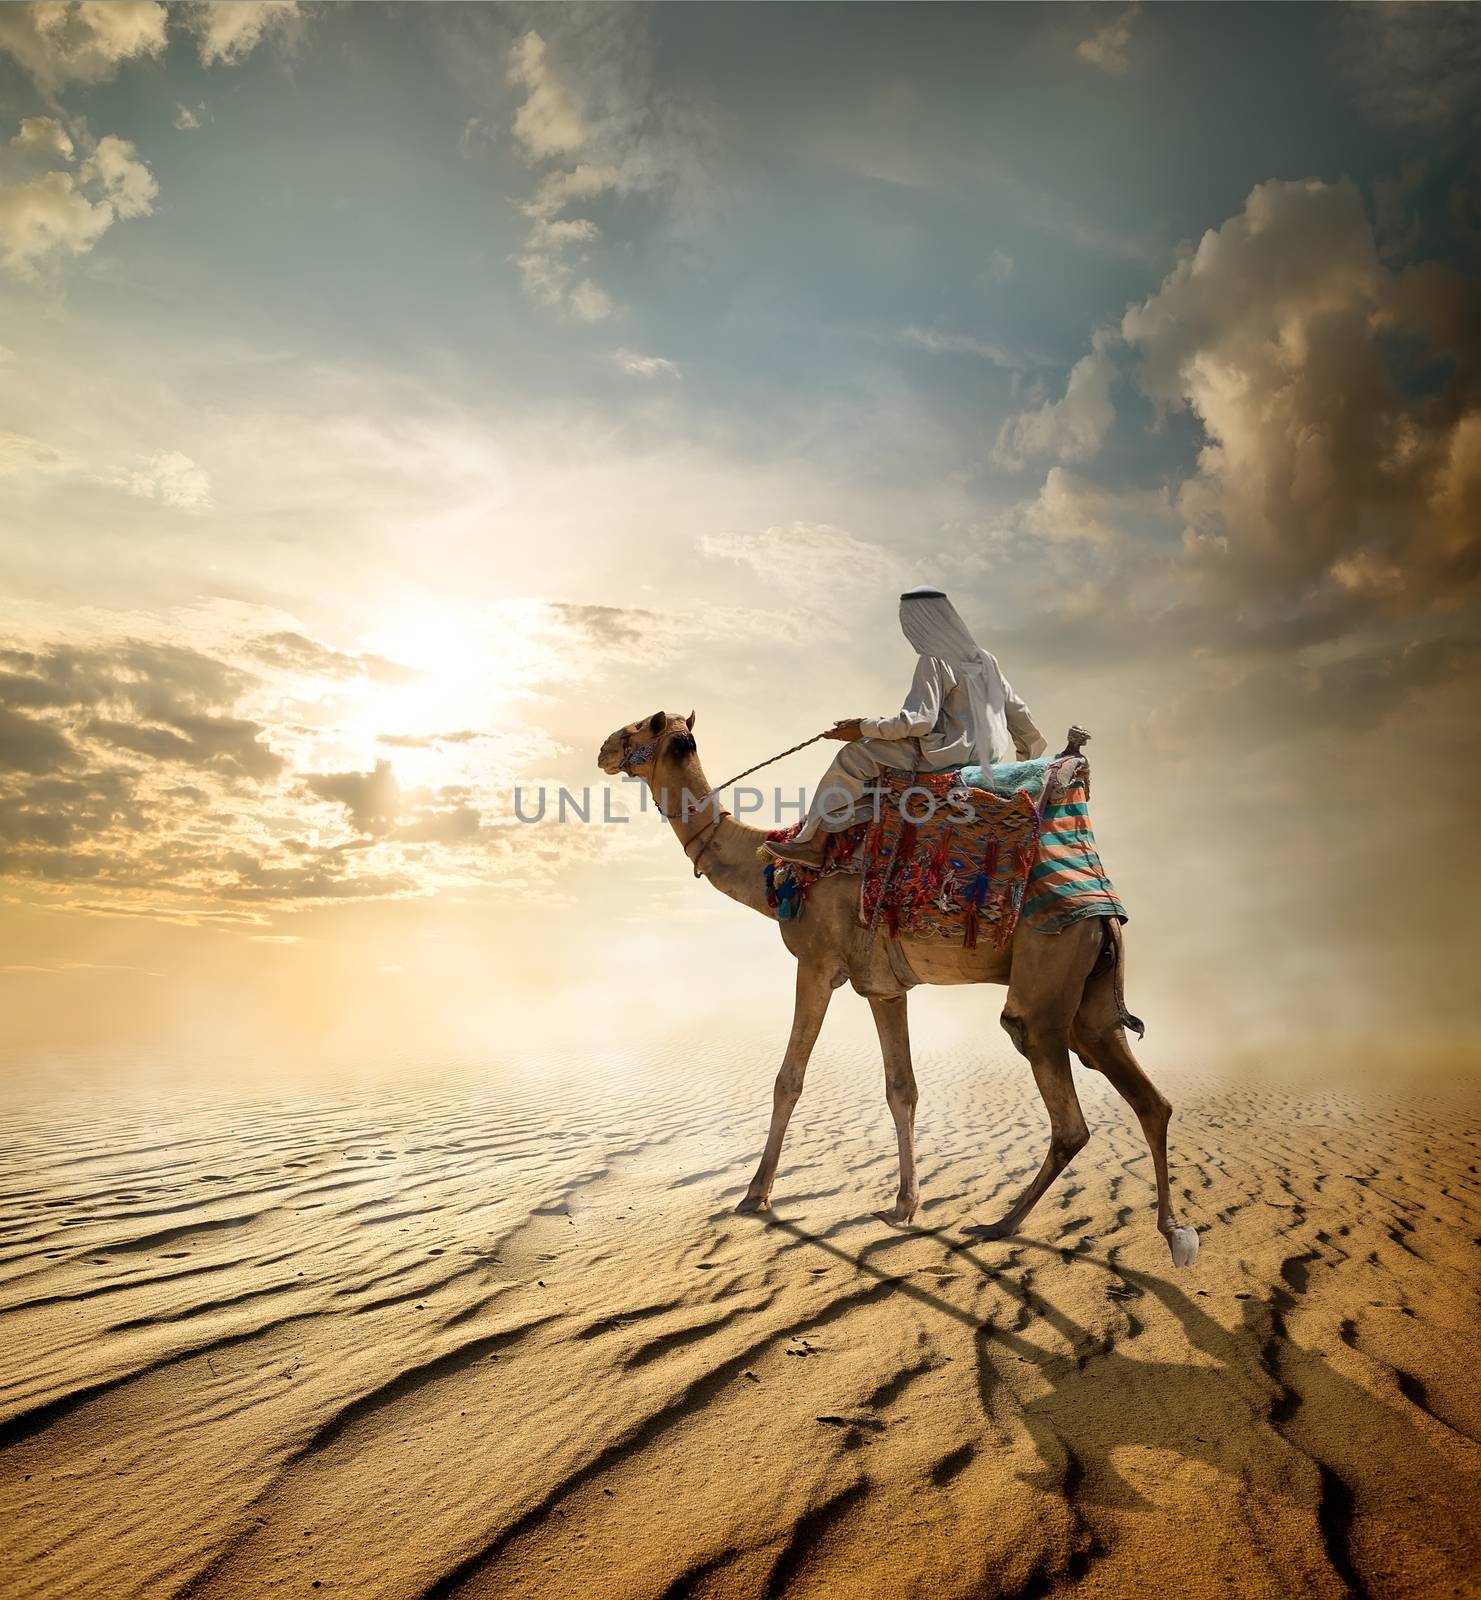 Journey through desert by Givaga